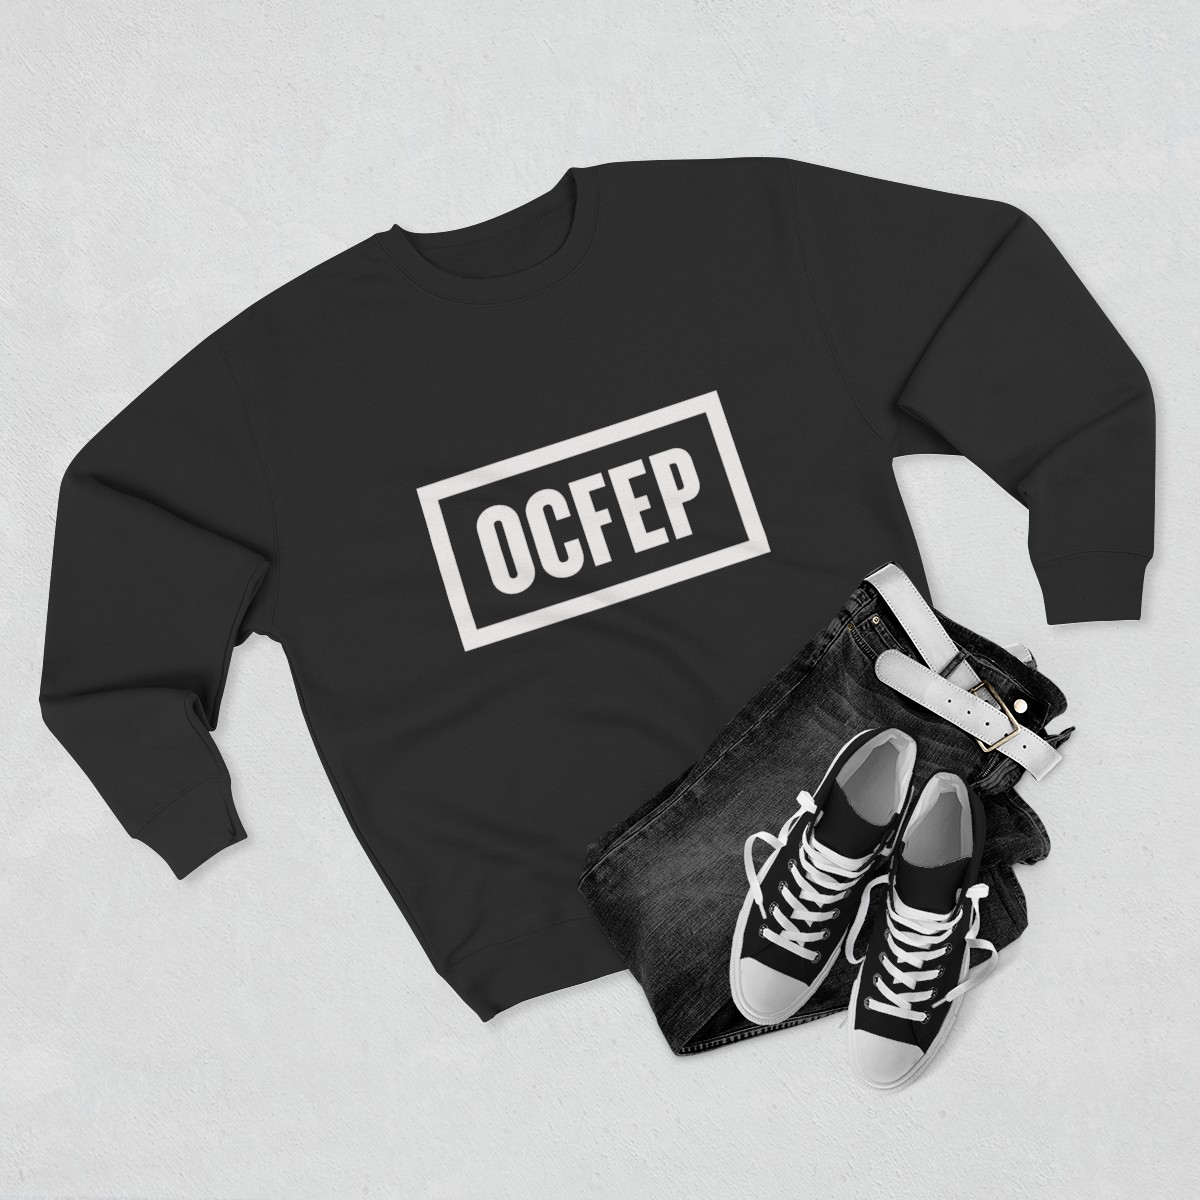 OCFEP Premium Crewneck Sweatshirt product thumbnail image